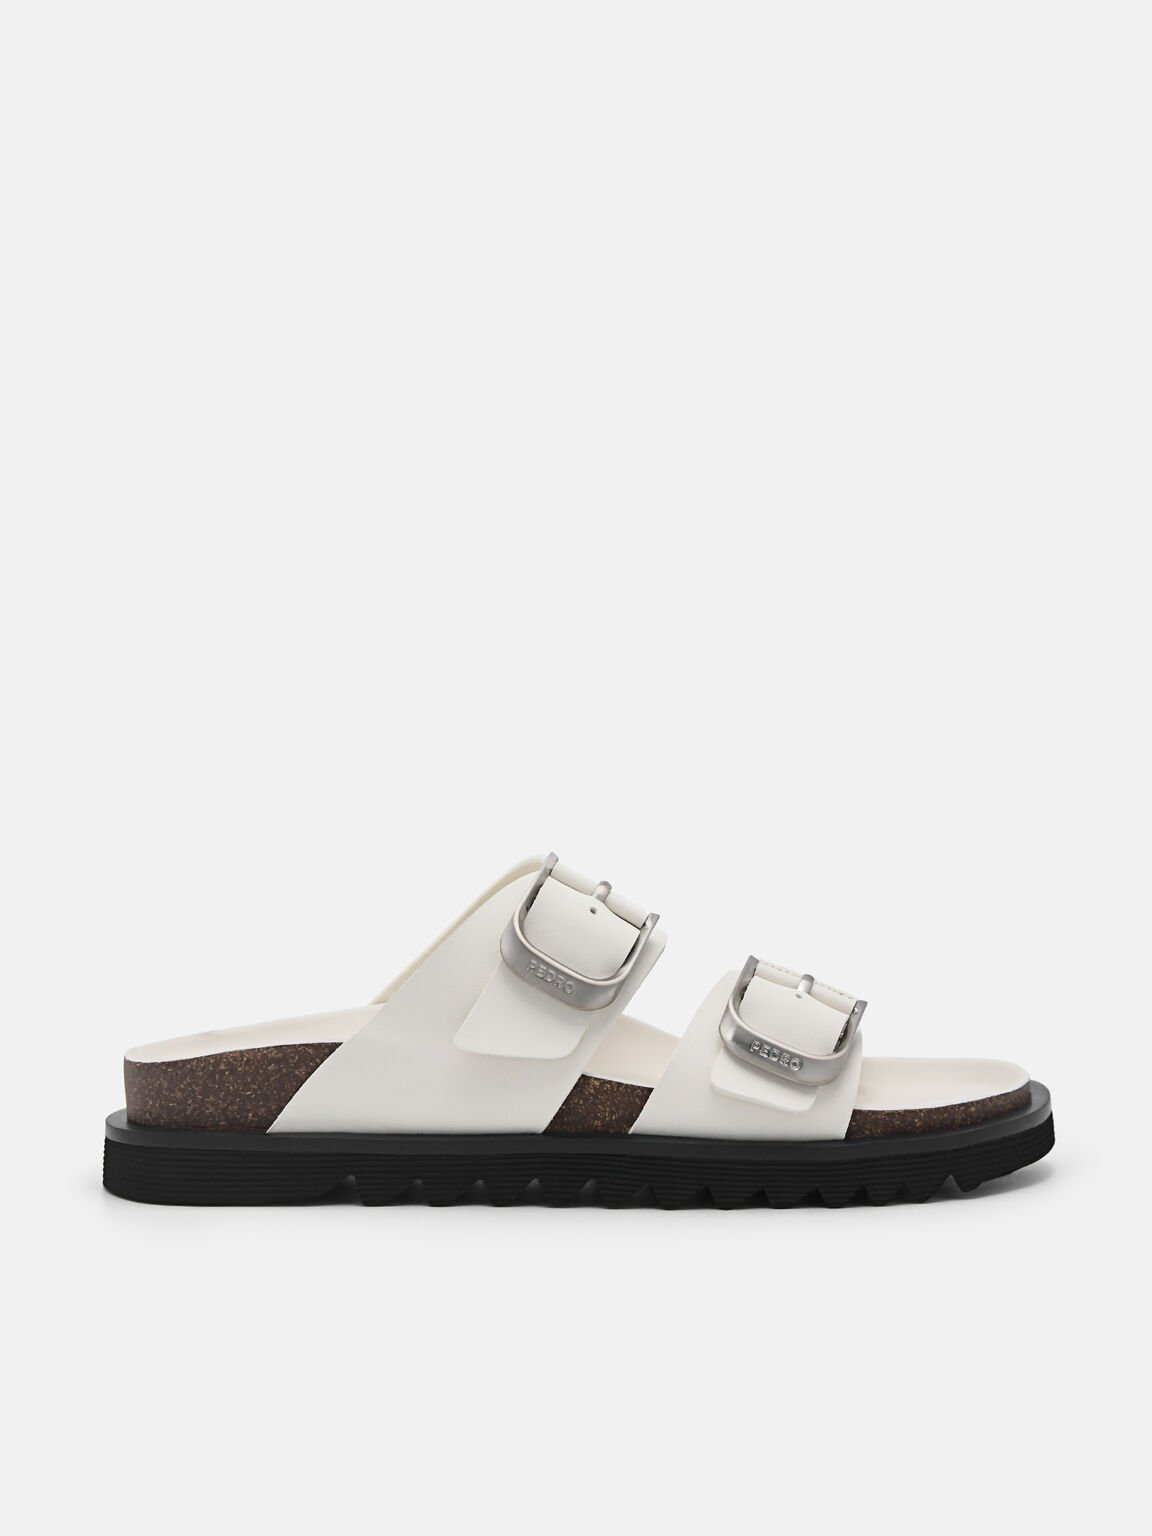 Helix Sandals, White, hi-res